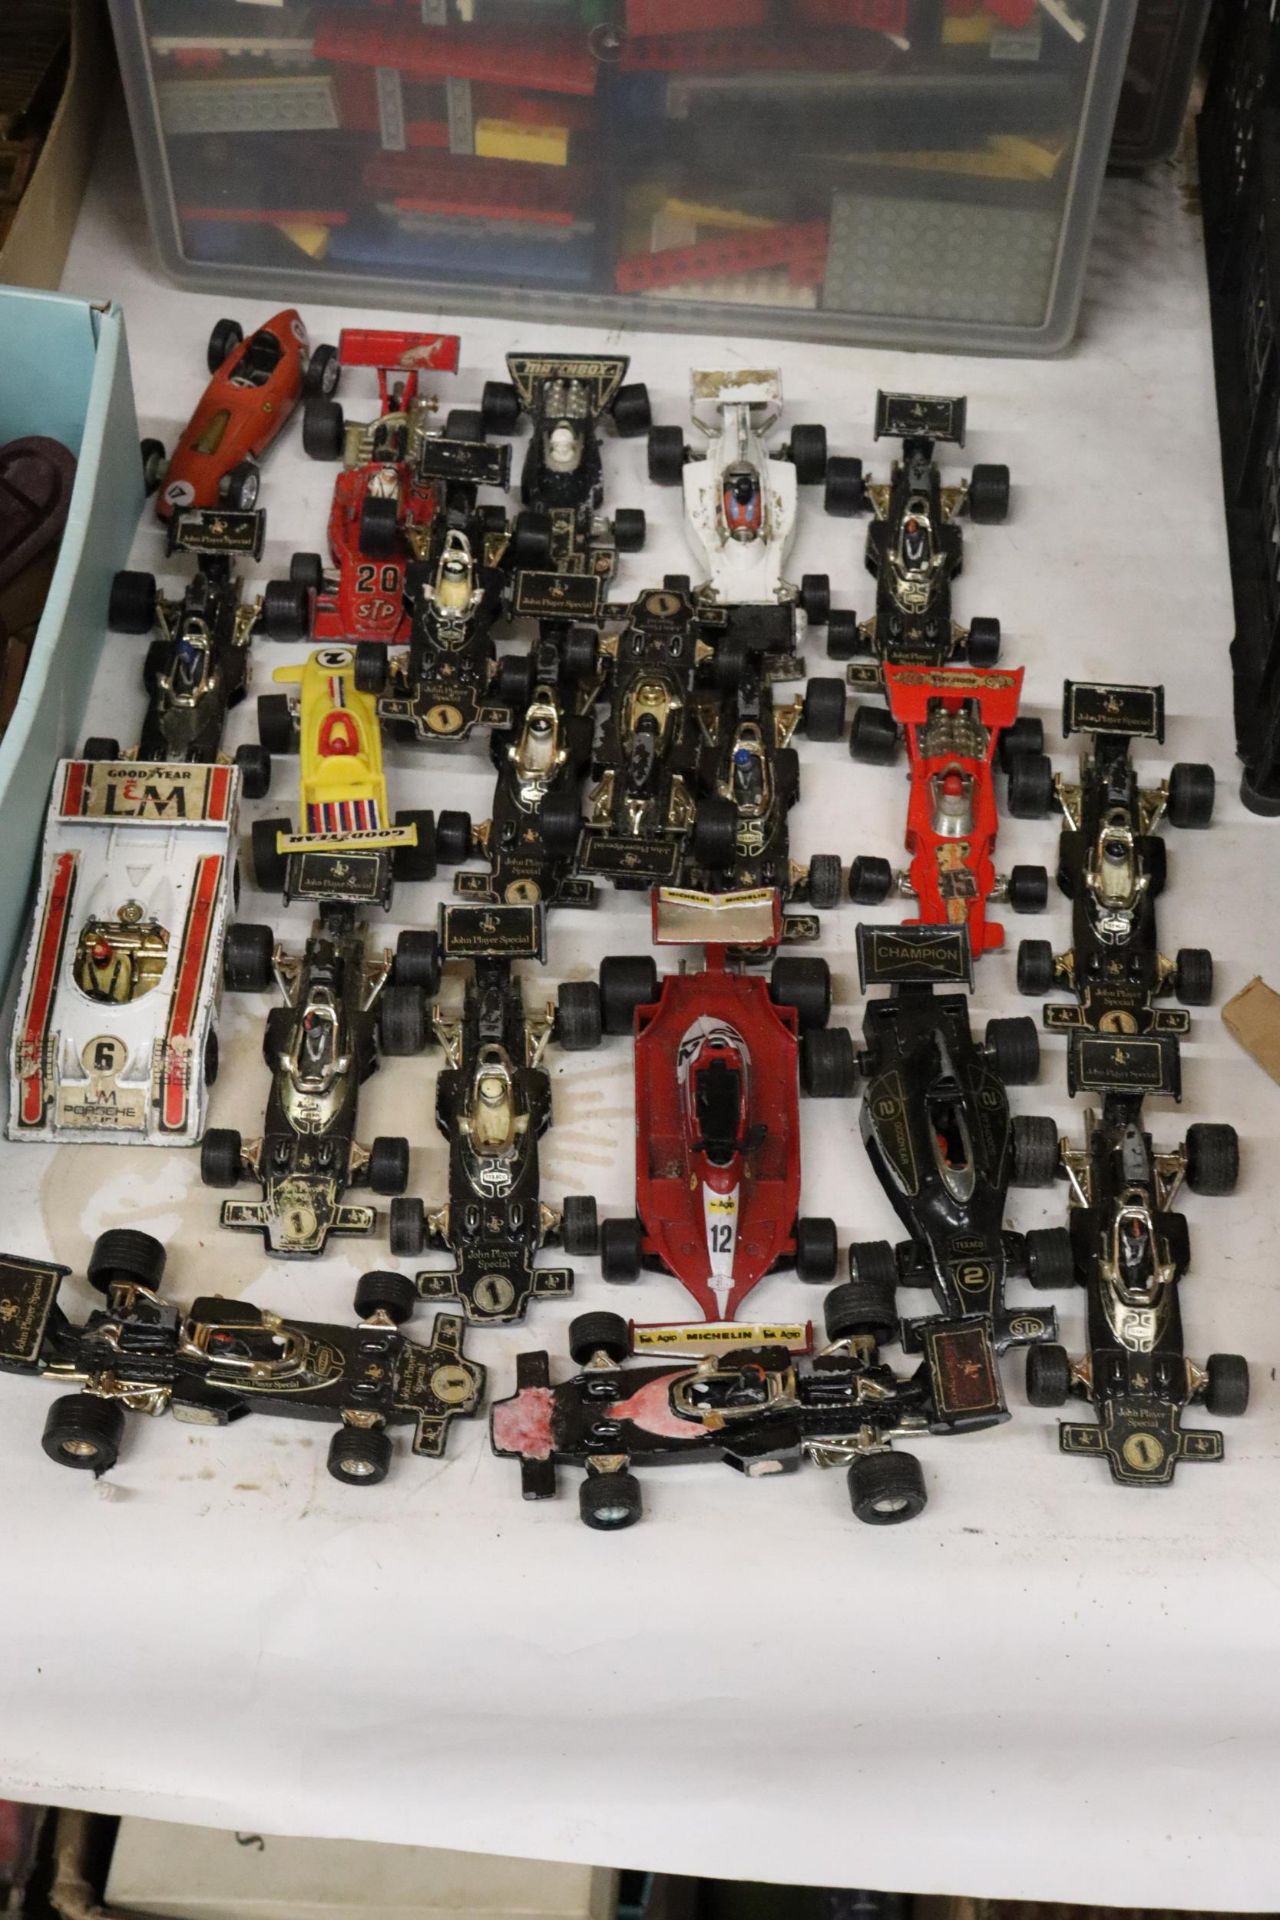 A LARGE QUANTITY OF VINTAGE DIE-CAST CORGI AND MATCHBOX F1 RACING CARS